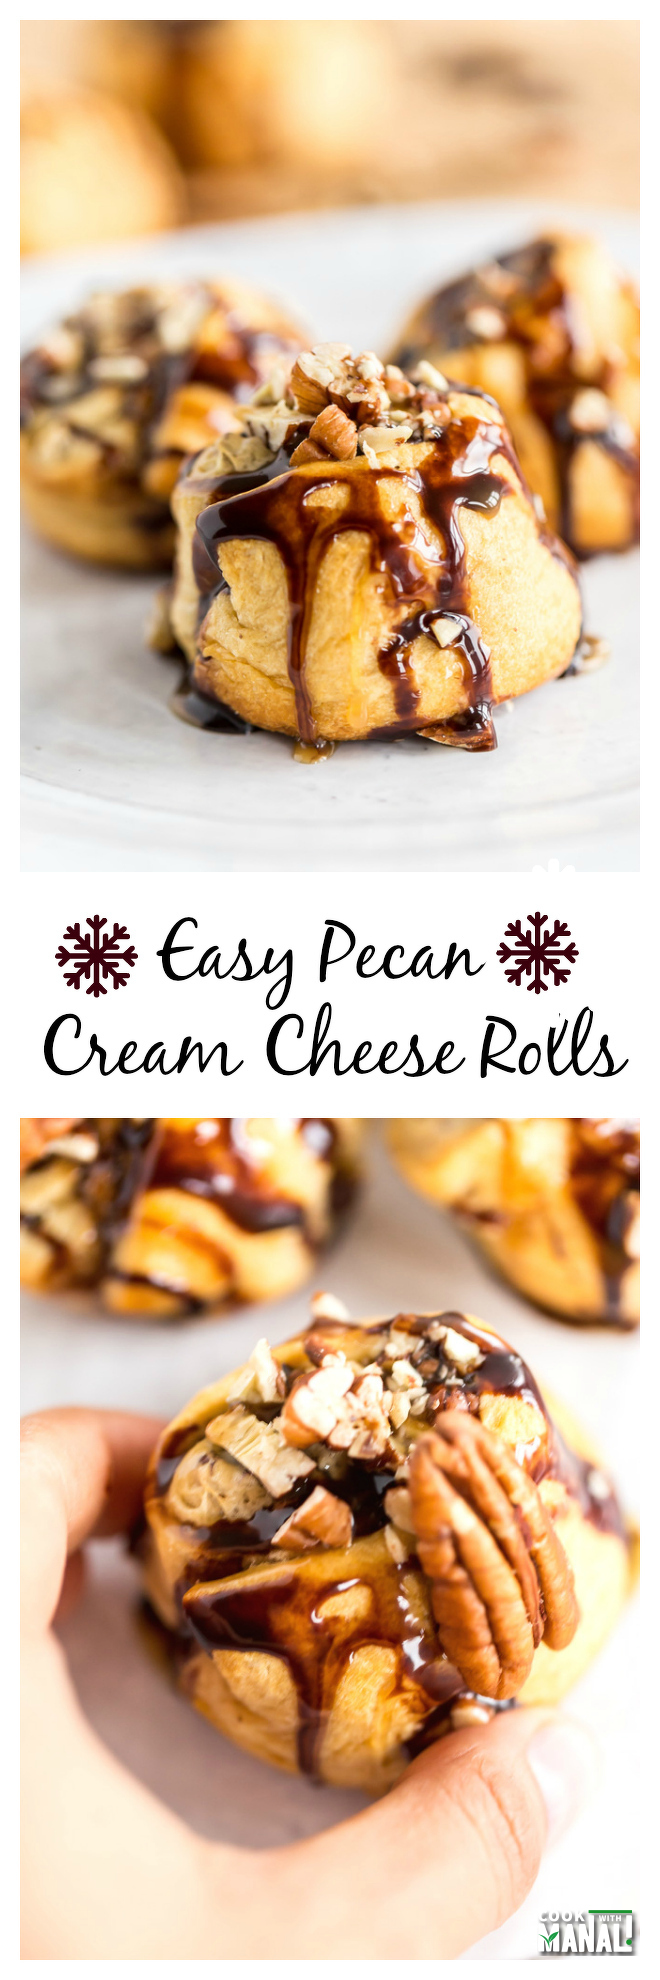 Easy Pecan Cream Cheese Rolls Collage